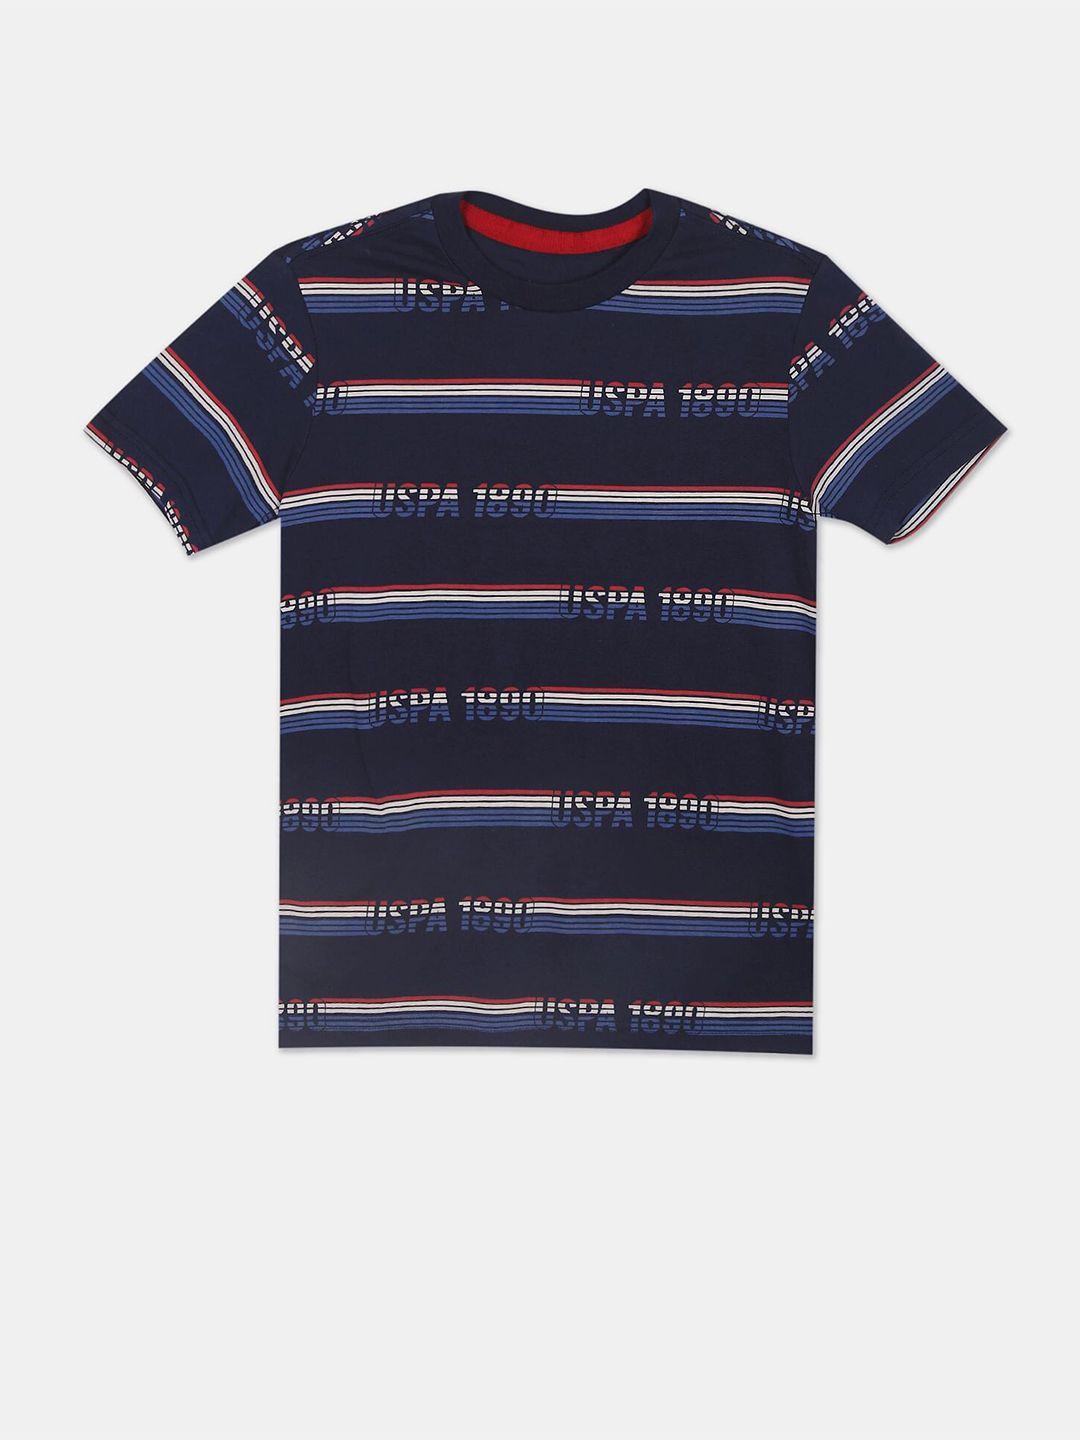 U S Polo Assn Boys Blue Striped T-shirt